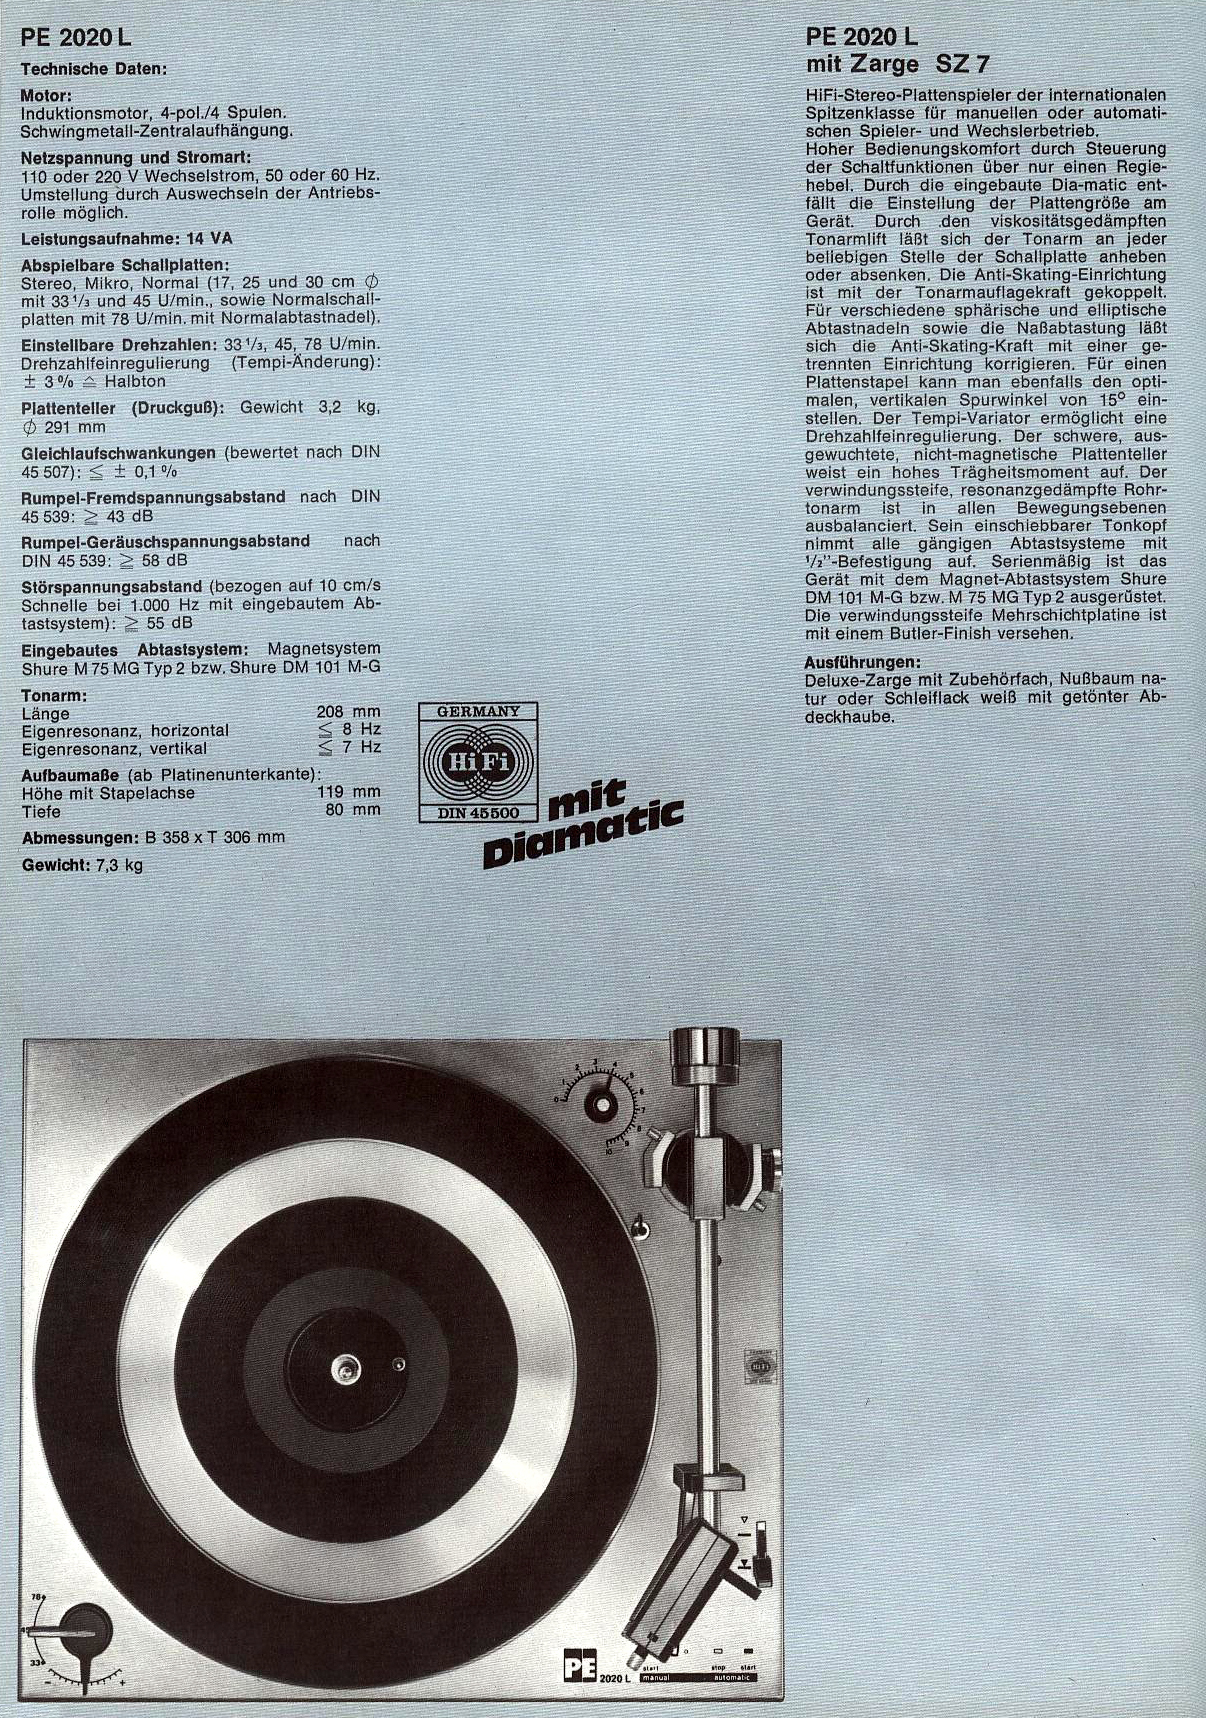 Perpetuum Ebner 2020 L-Prospekt-1972.jpg